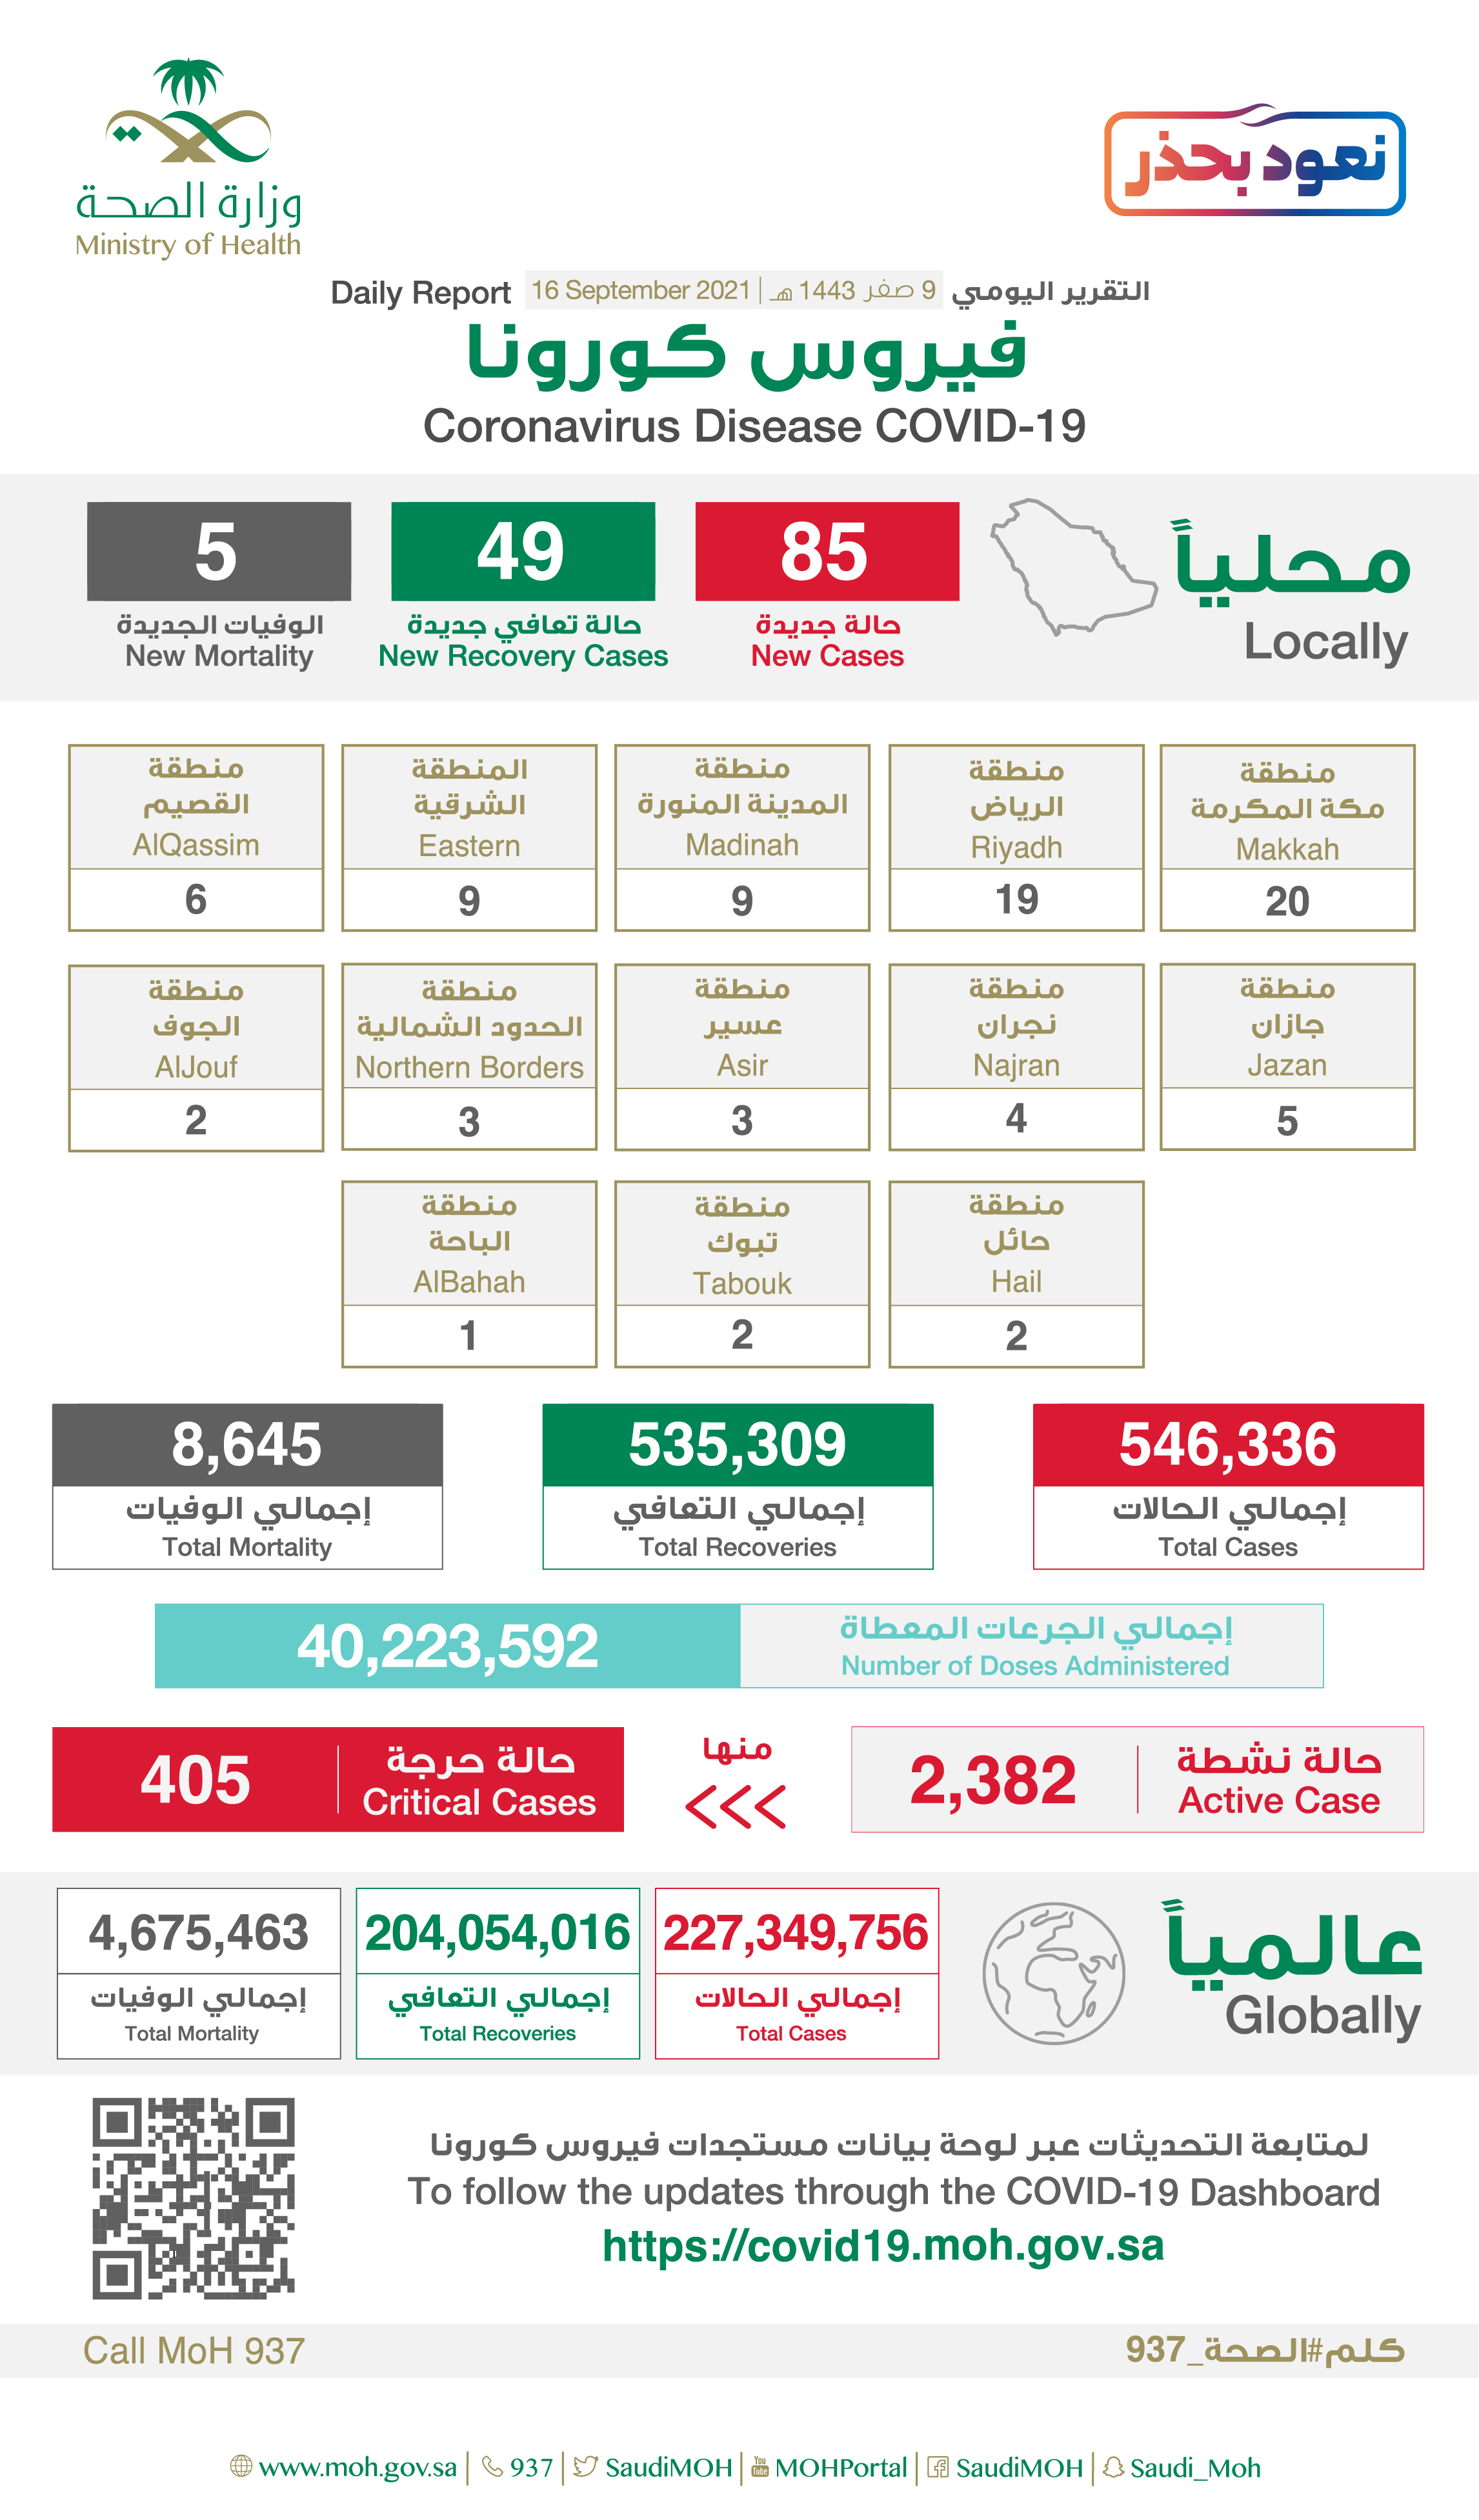 Saudi Arabia Coronavirus : Total Cases : 546,336 , New Cases : 85, Cured : 535,309 , Deaths: 8,645, Active Cases : 2,382